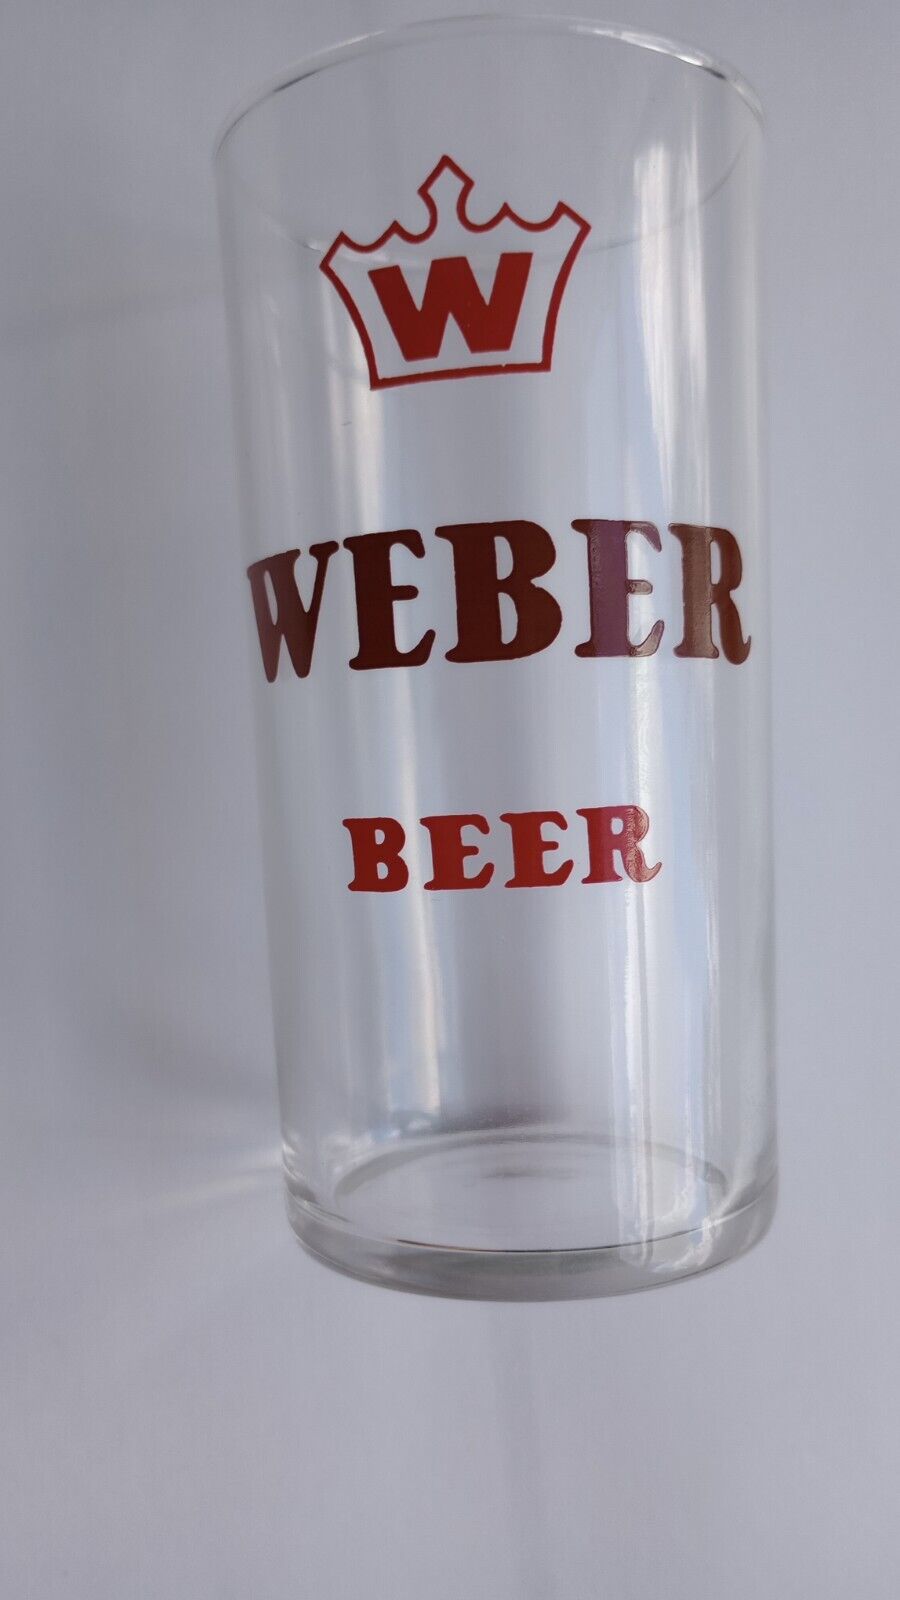 Vintage 8 oz Weber beer glass.  Excellent condition with no chips or cracks.